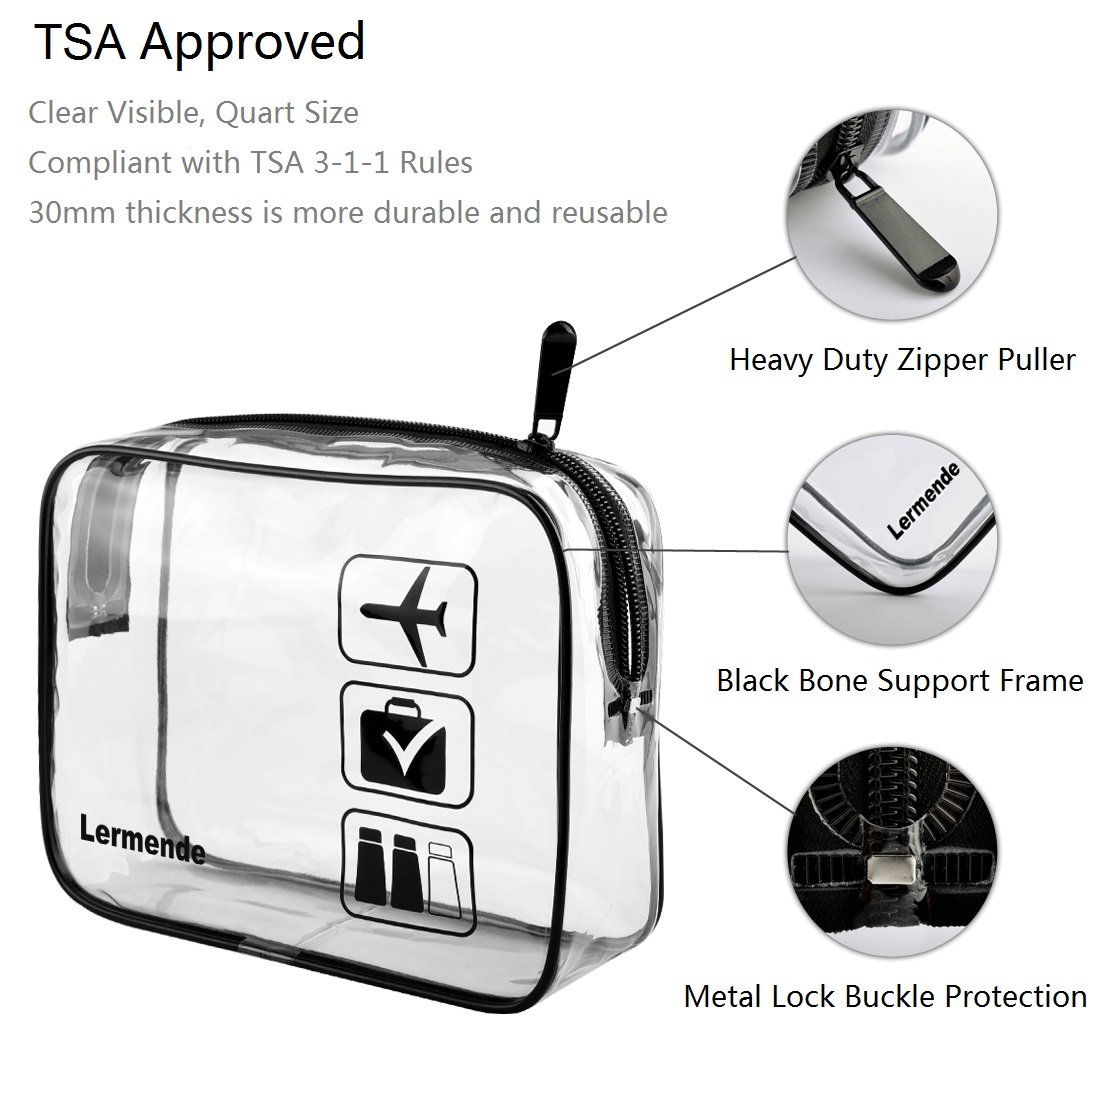 Toiletry Bag Set with TSA Approved Quart Size Bag